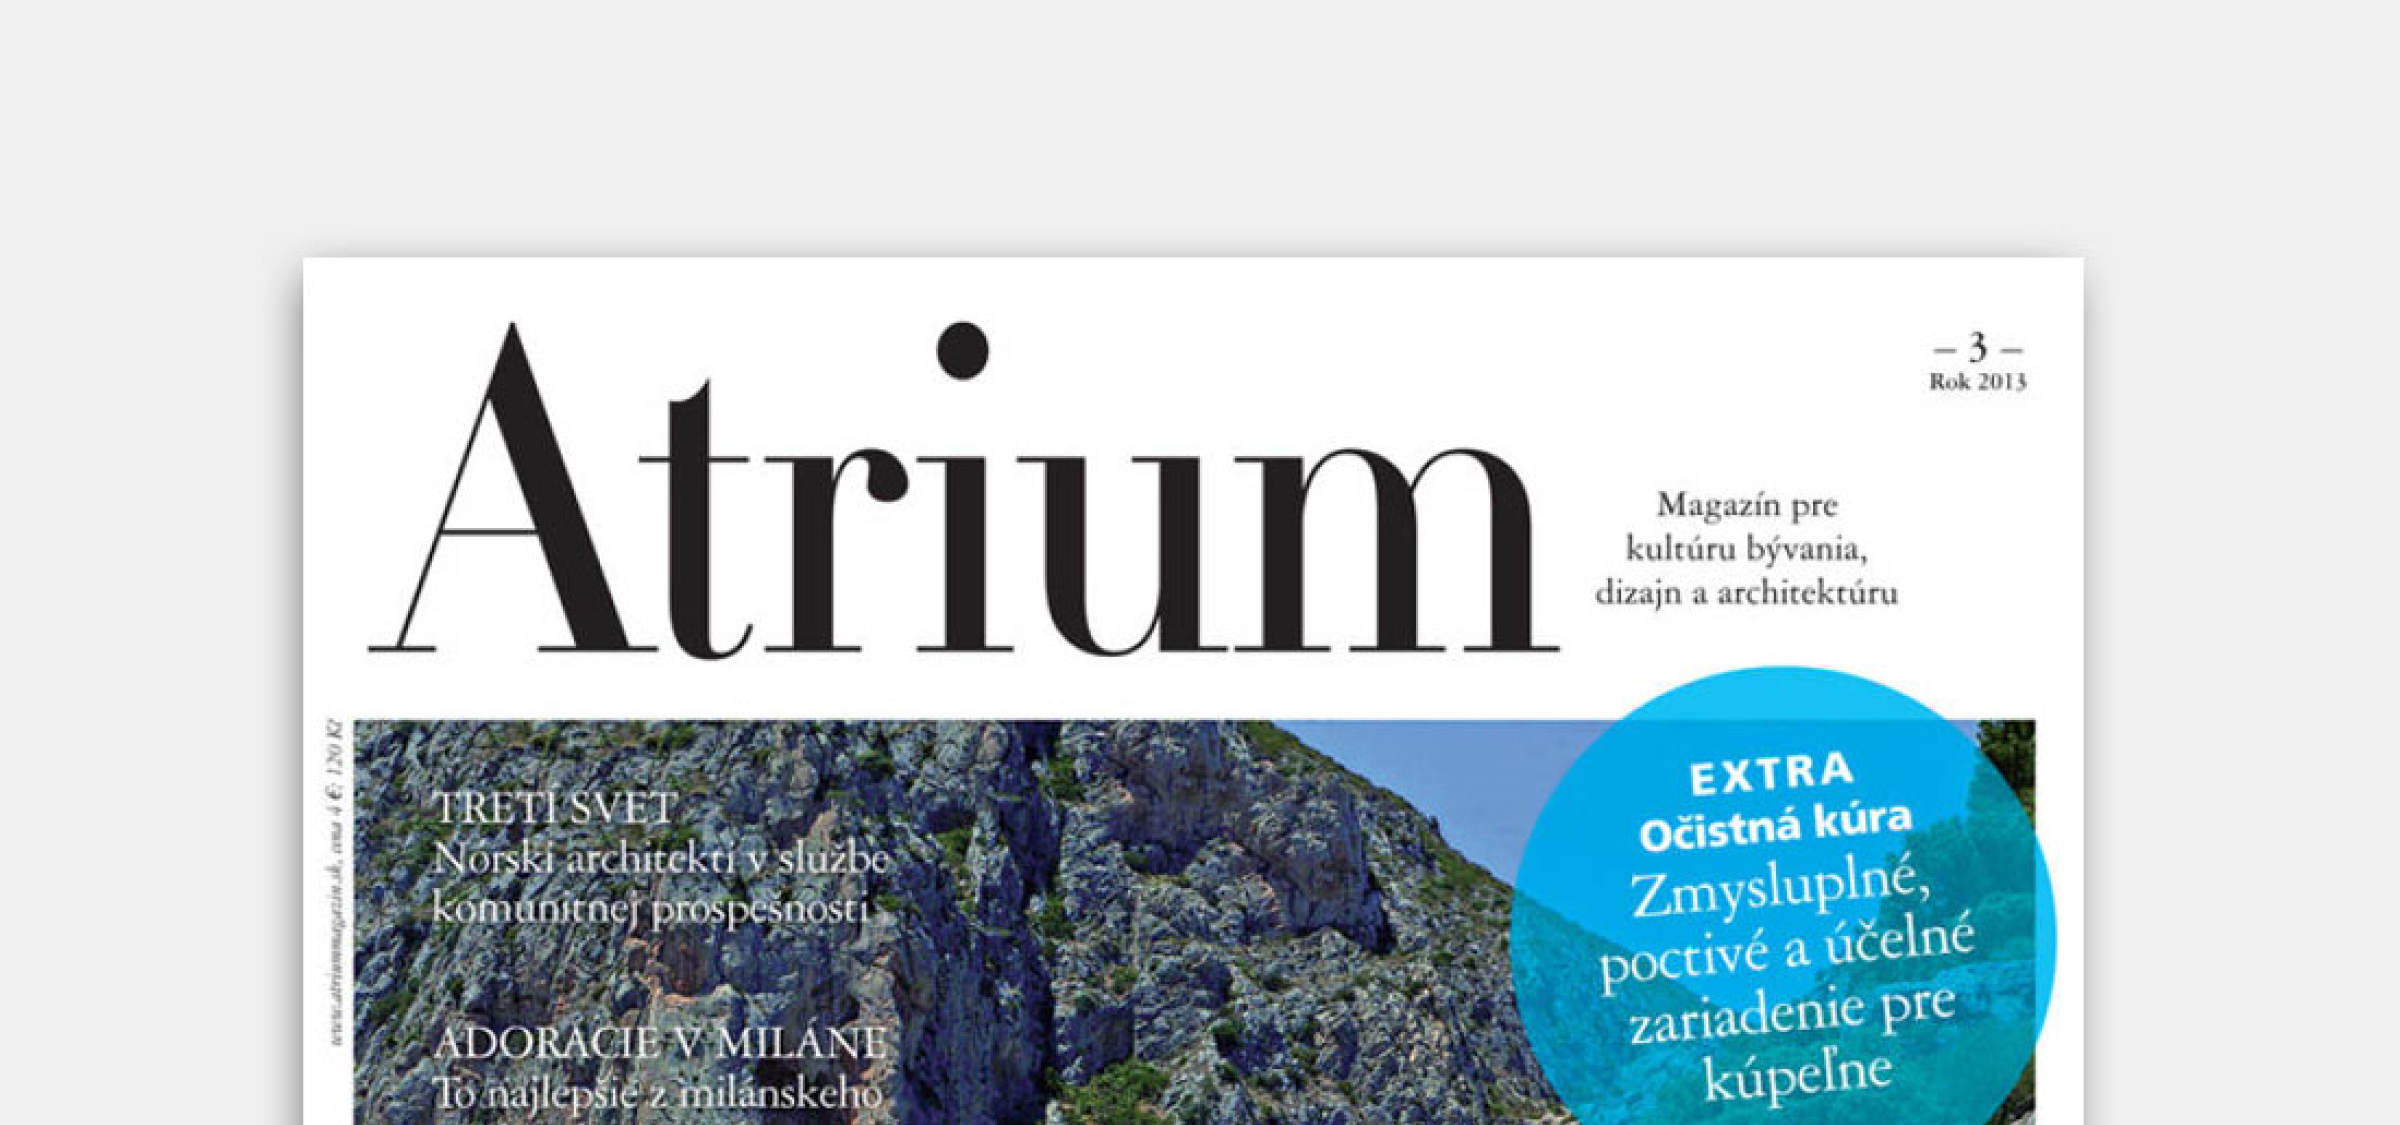 Atrium - Architecture from another world | News | Atrium Architekti